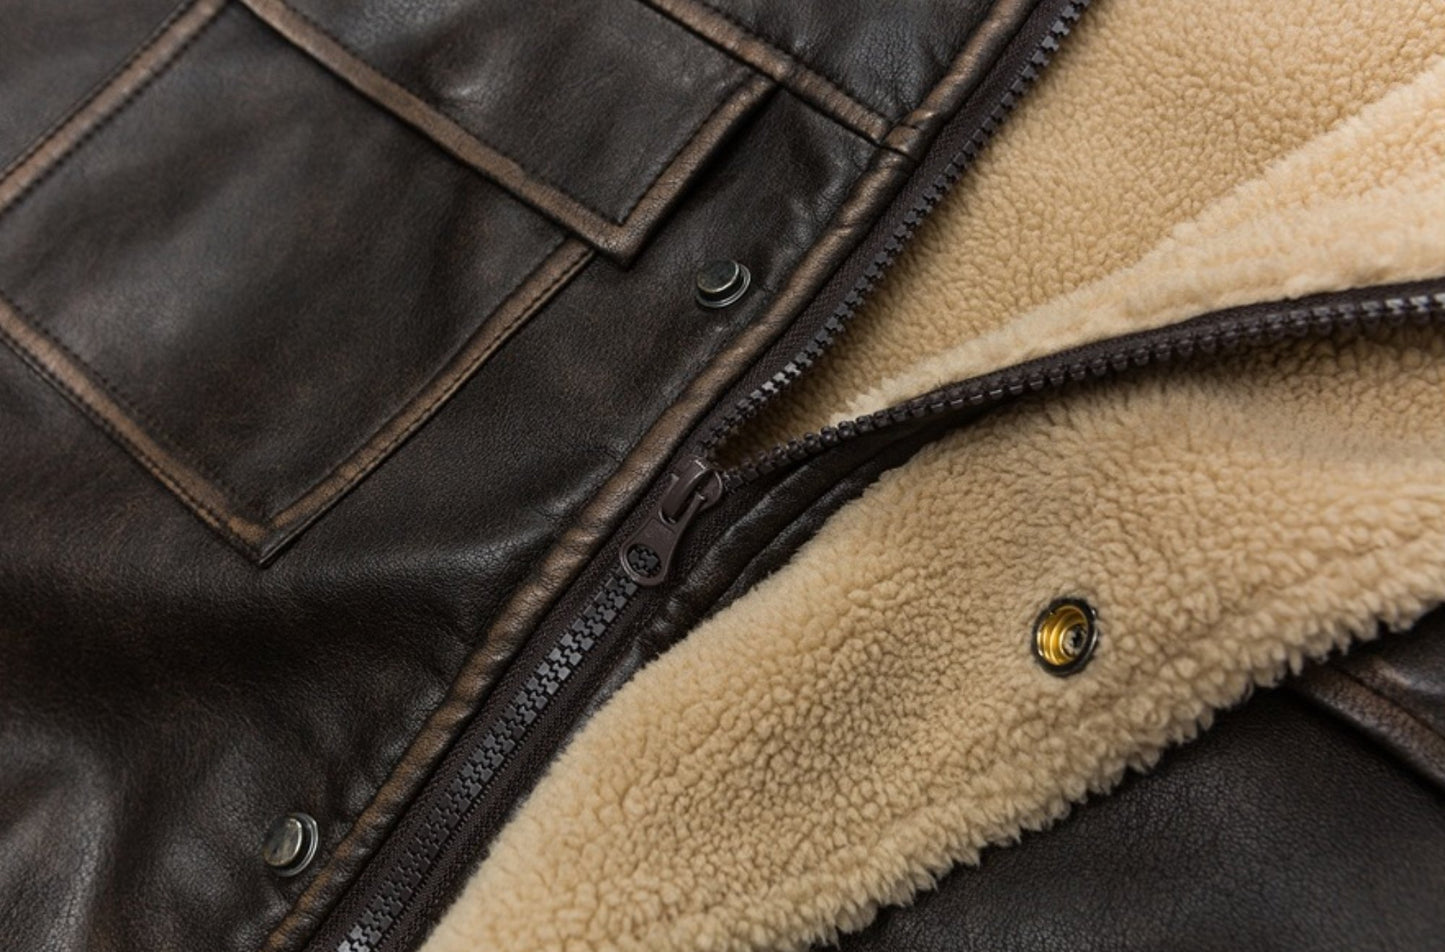 Winter PU Leather Jacket